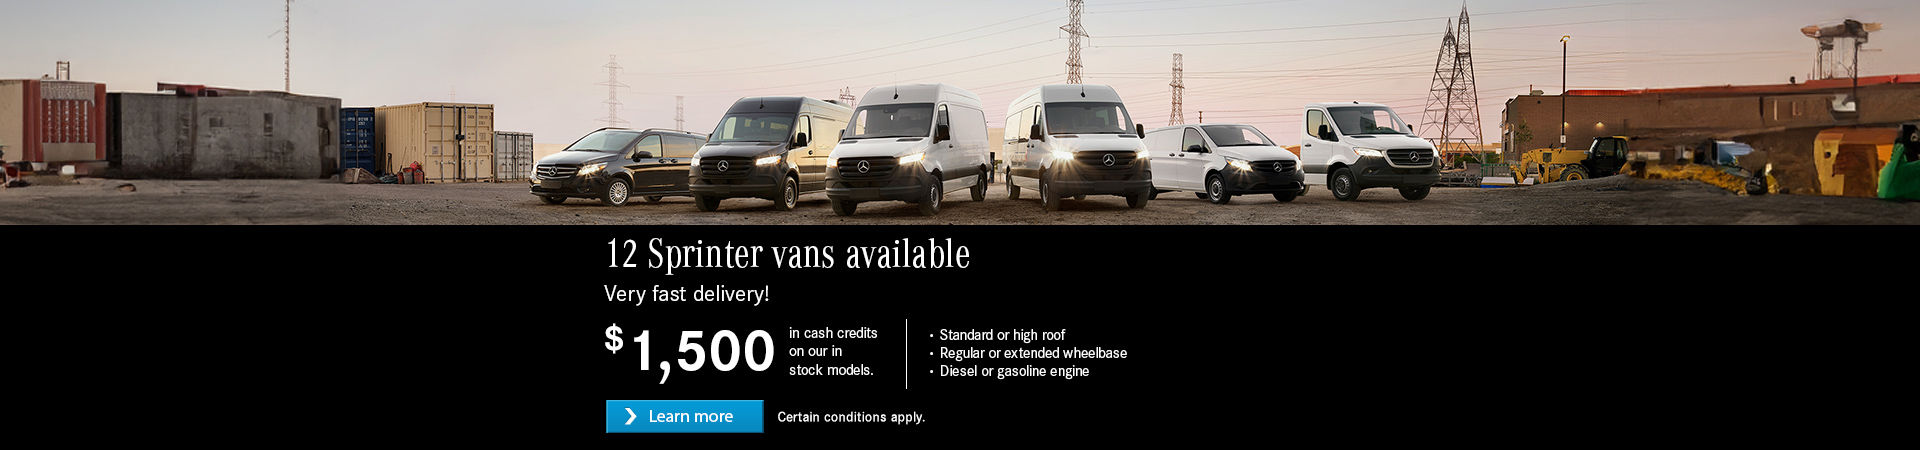 12 Sprinter Vans Available